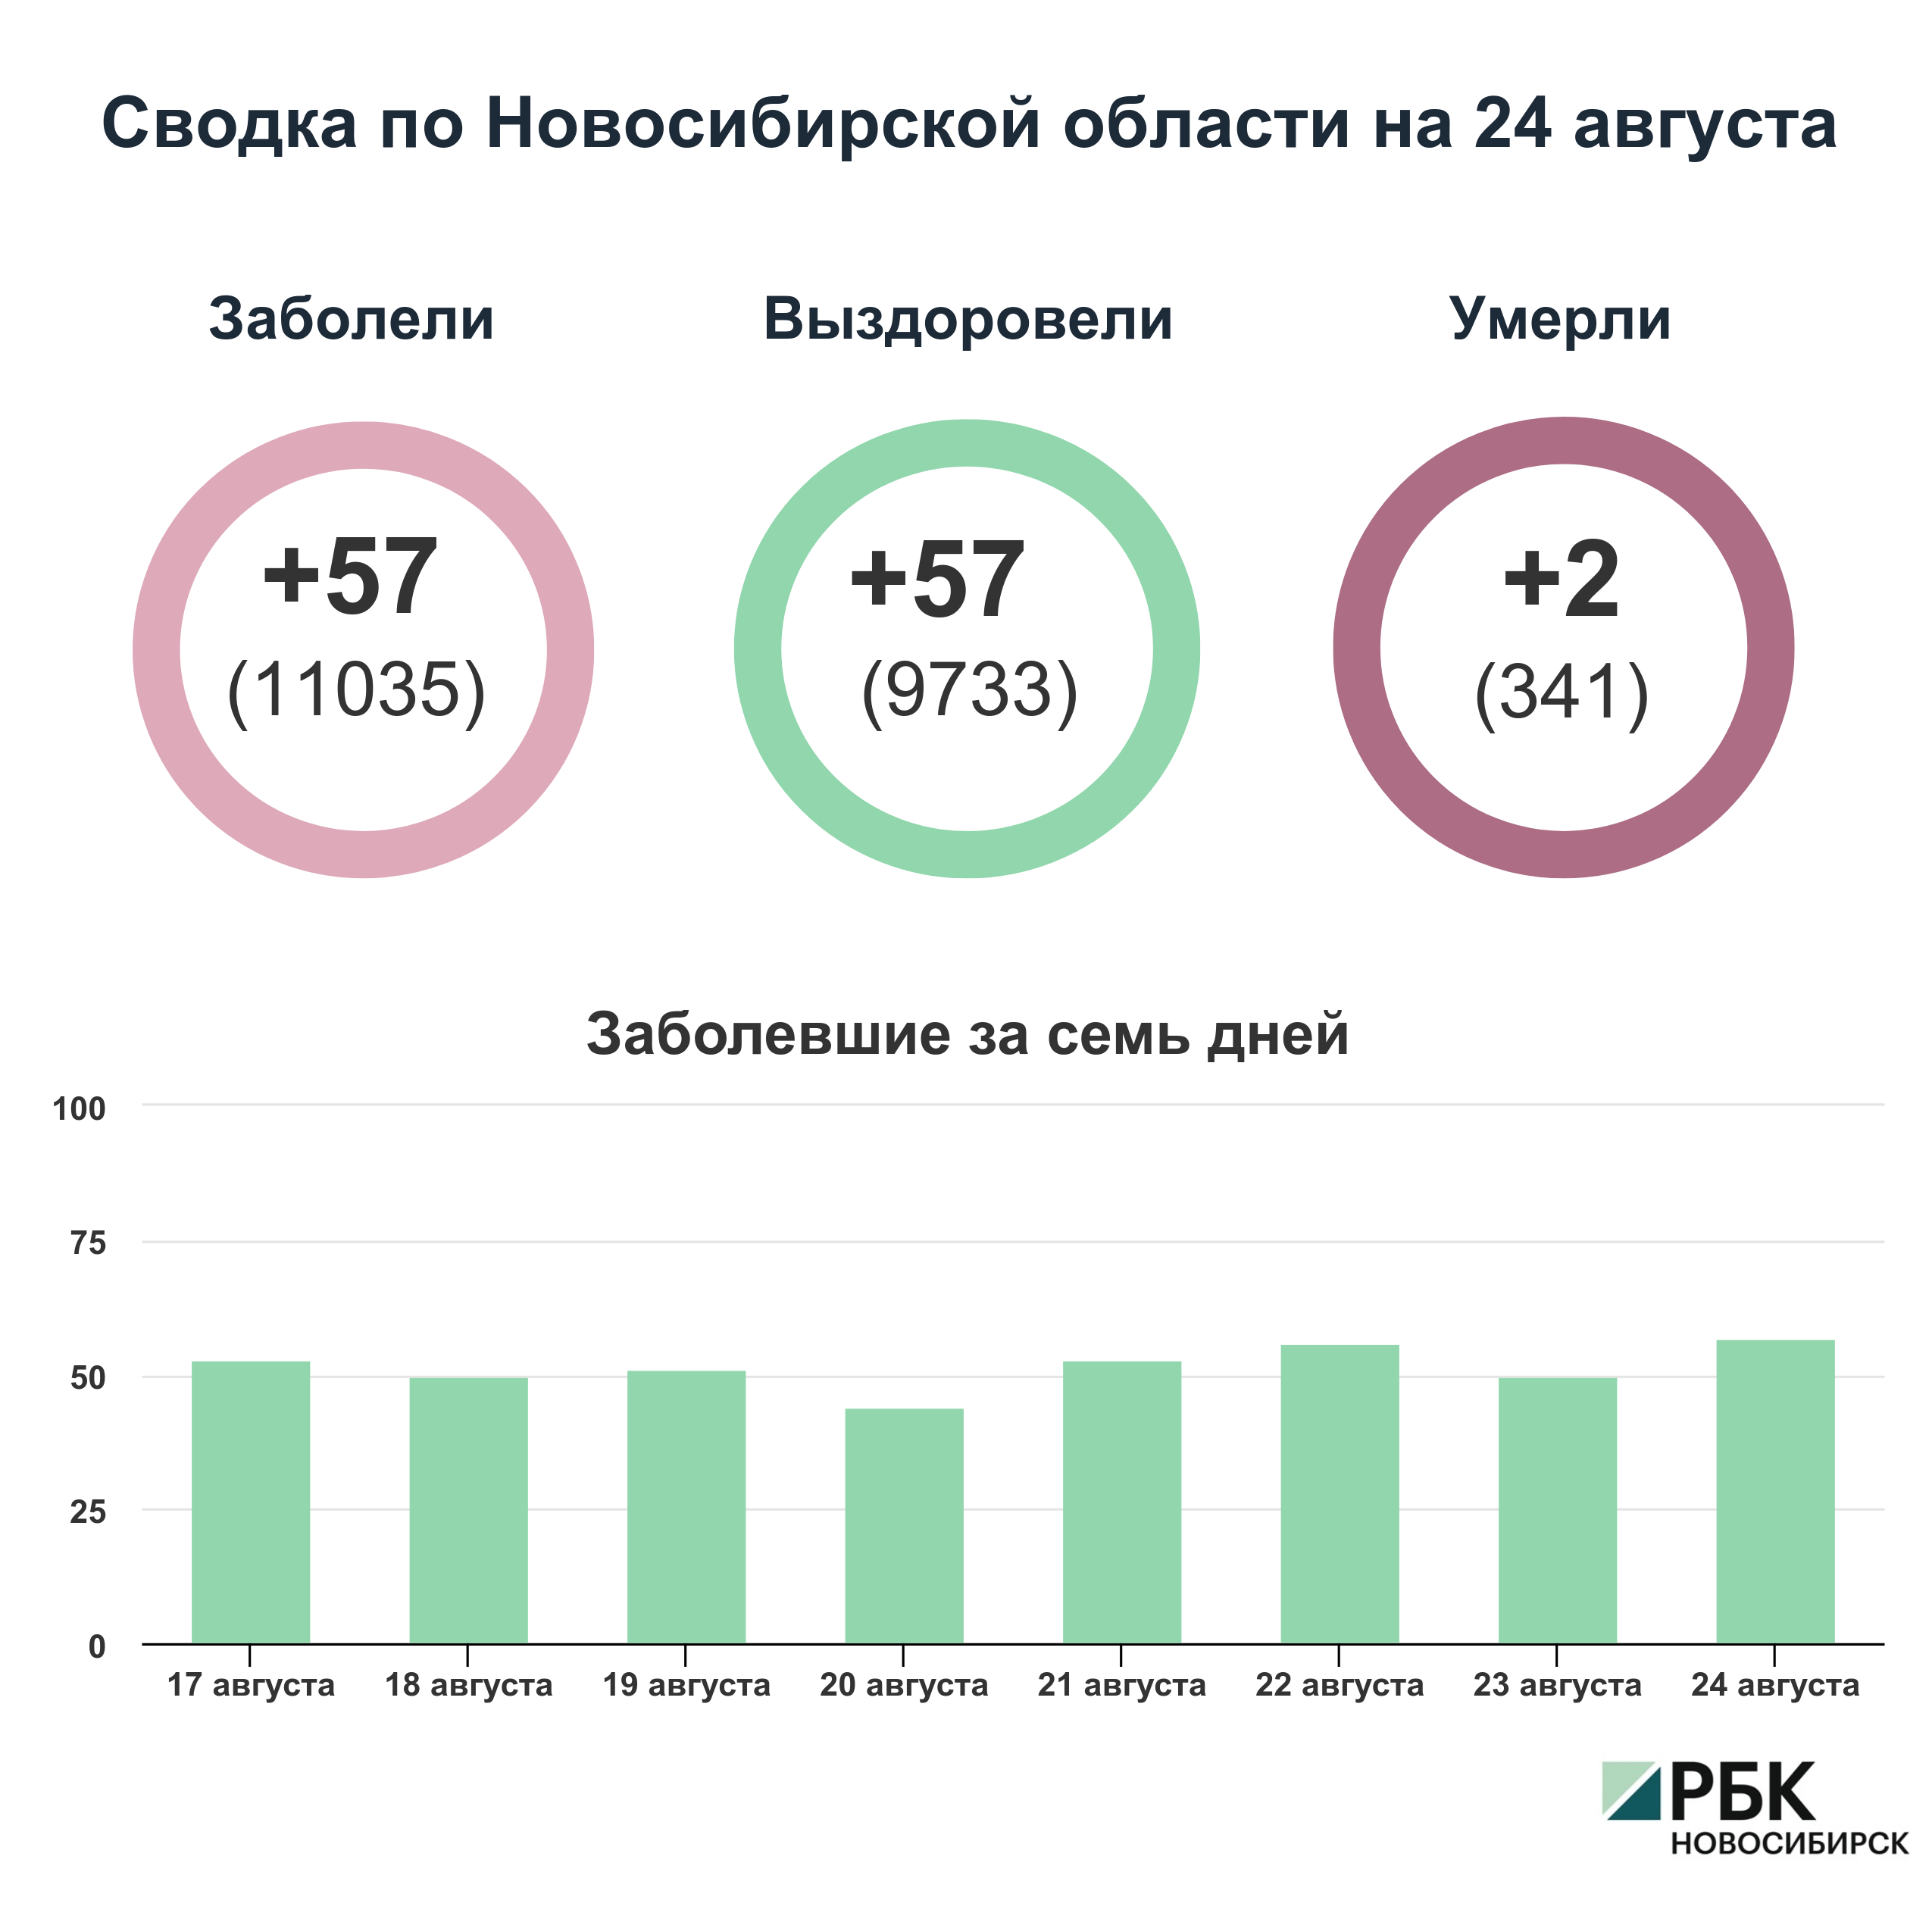 Коронавирус в Новосибирске: сводка на 24 августа